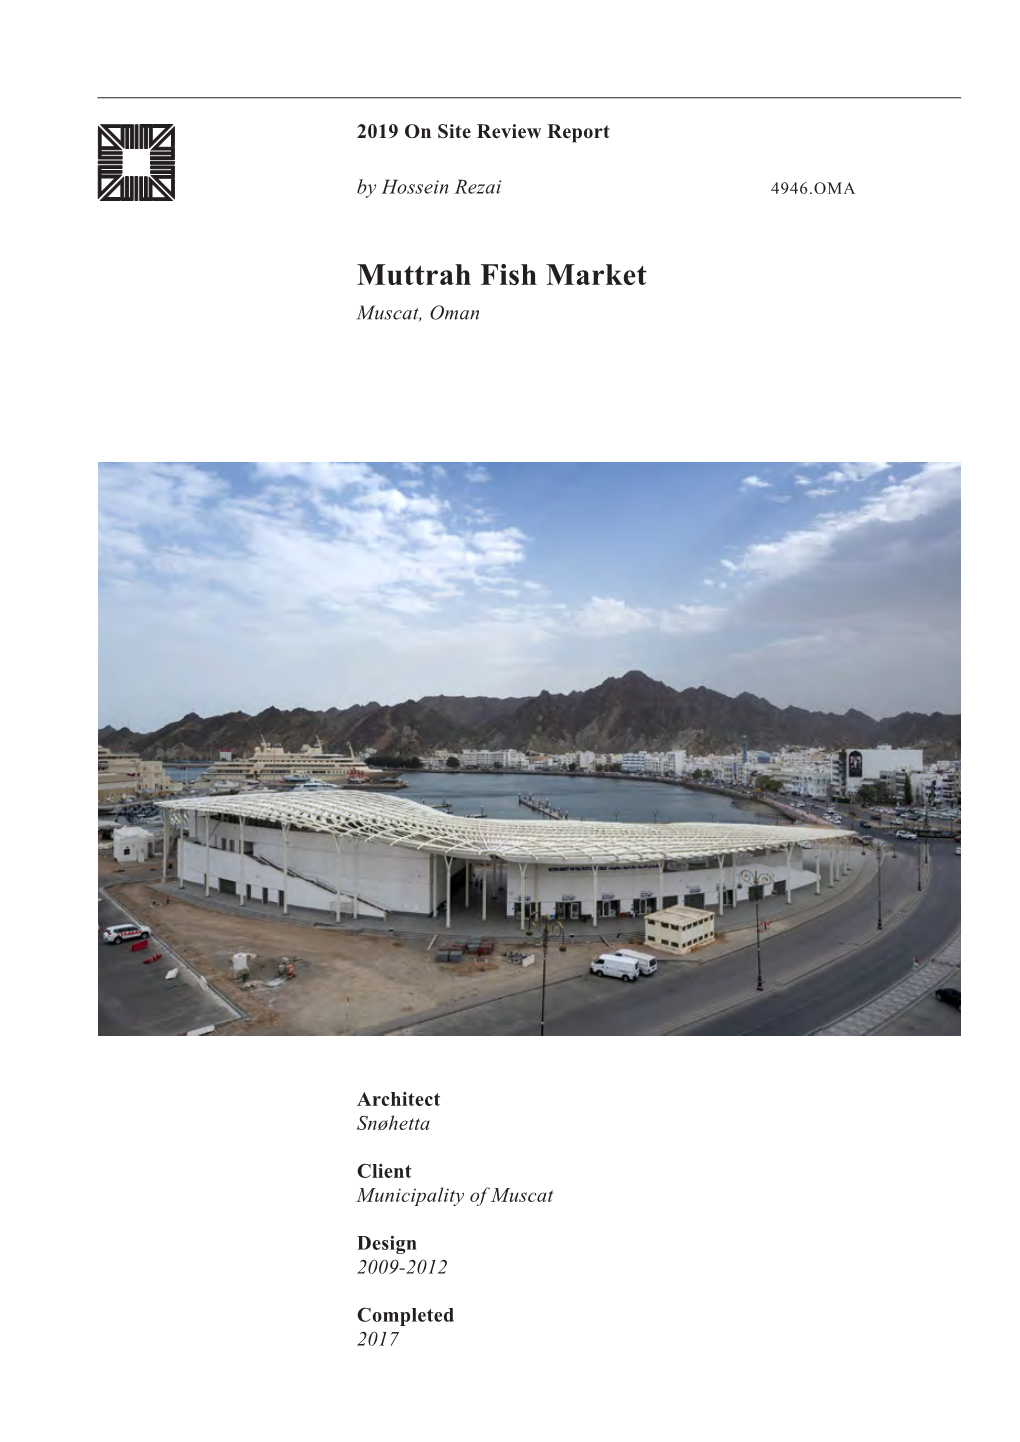 Muttrah Fish Market Muscat, Oman